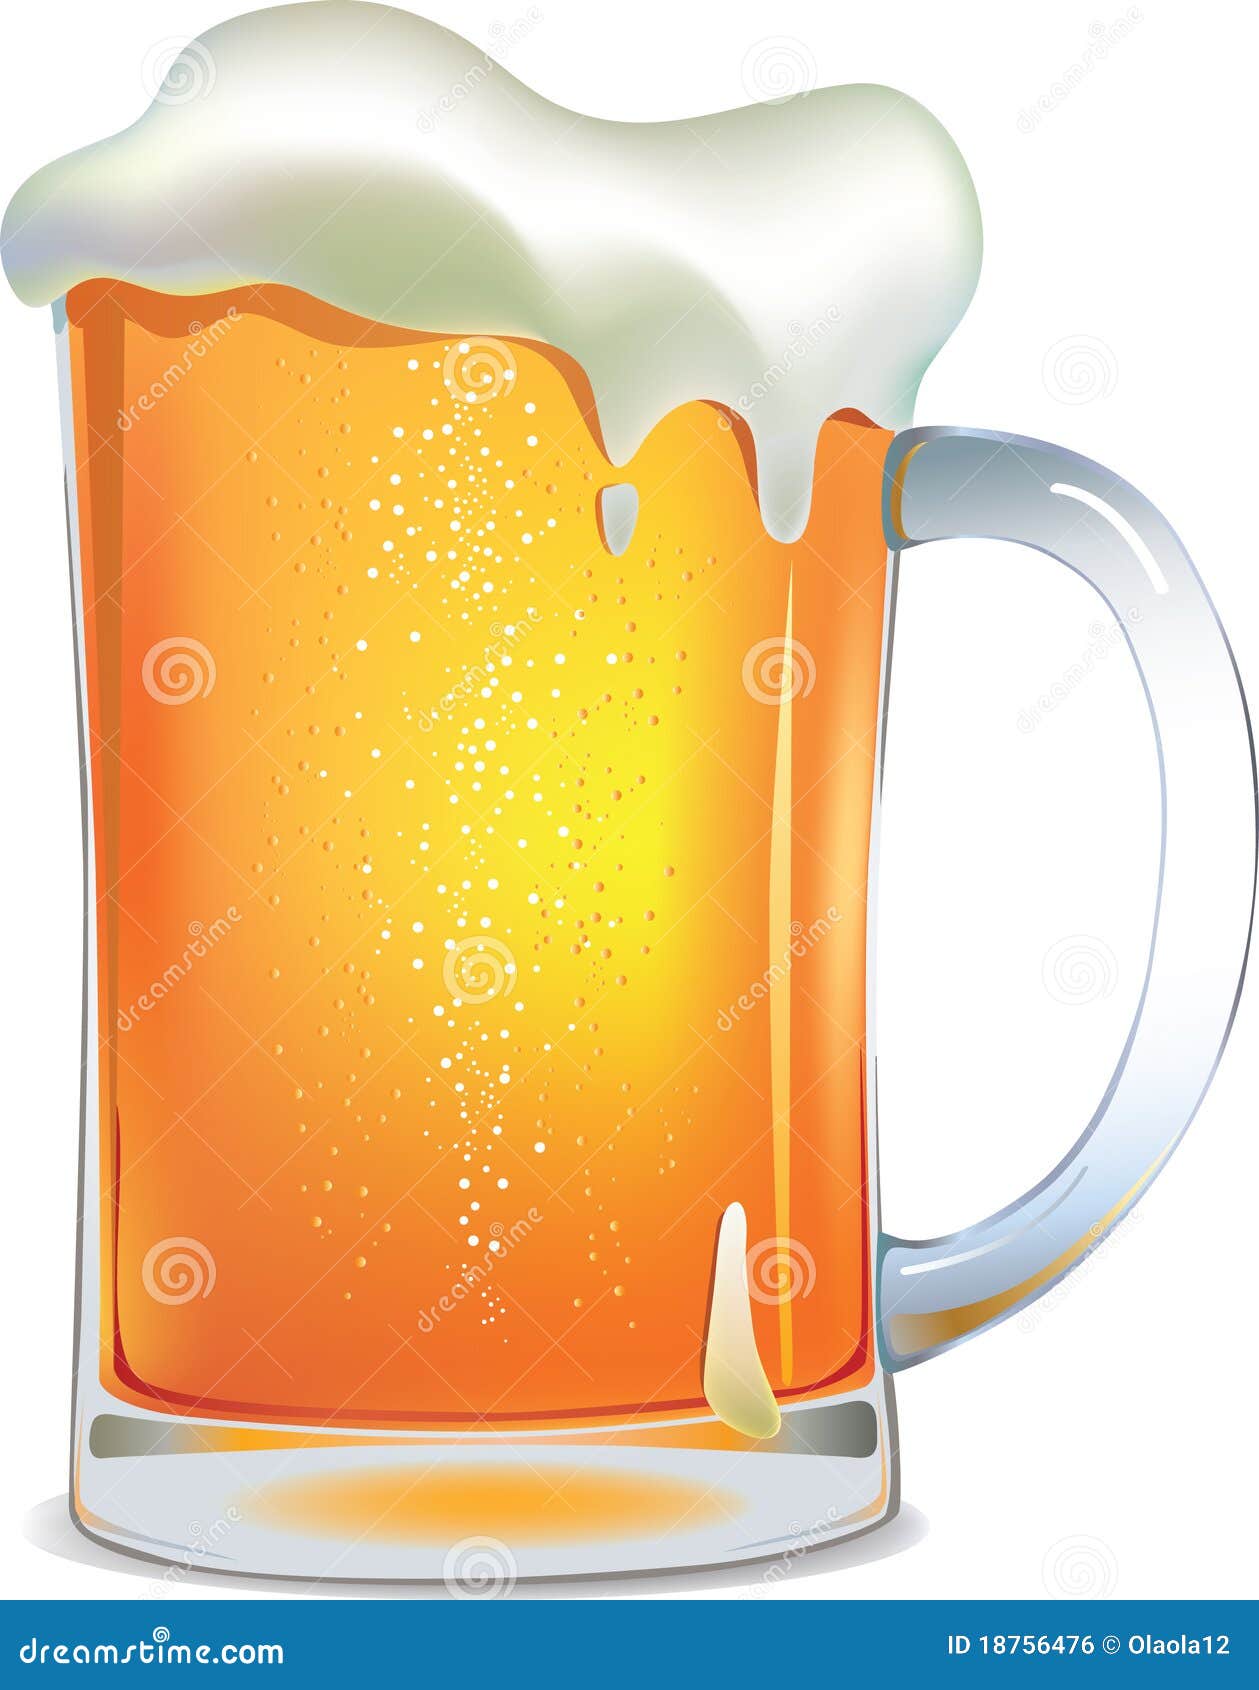 light beer mug